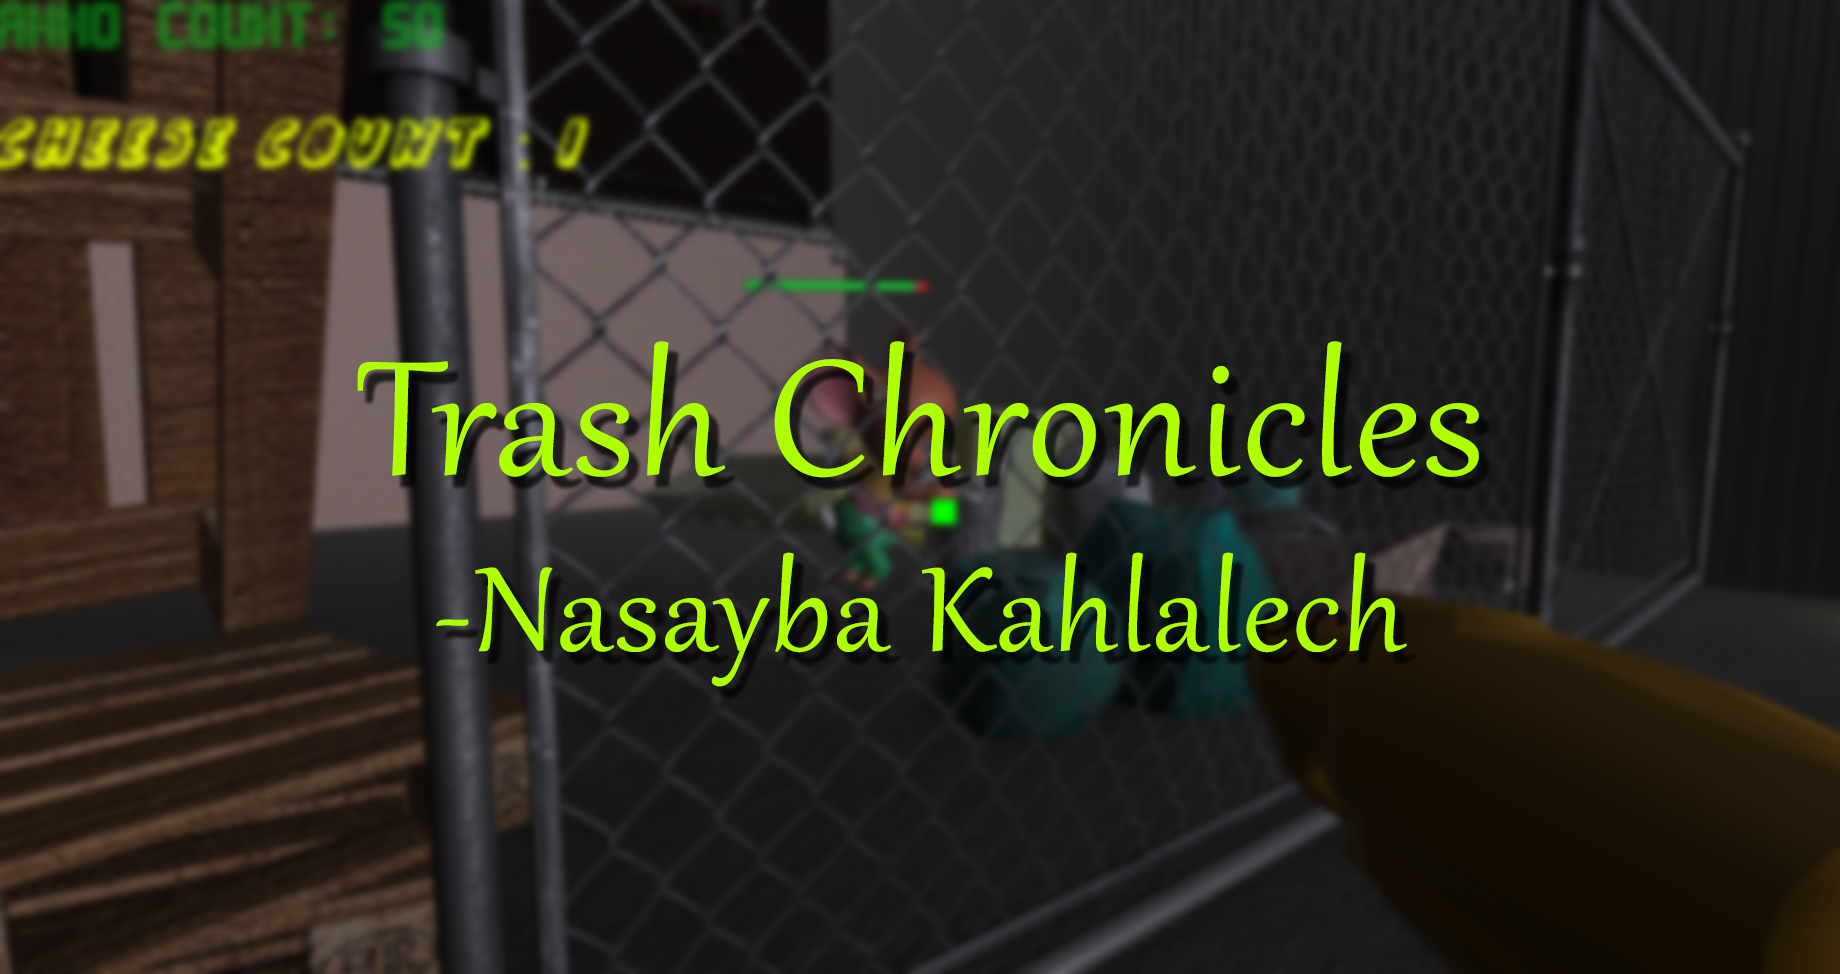 Trash Chronicles - Nasayba Kahlalech